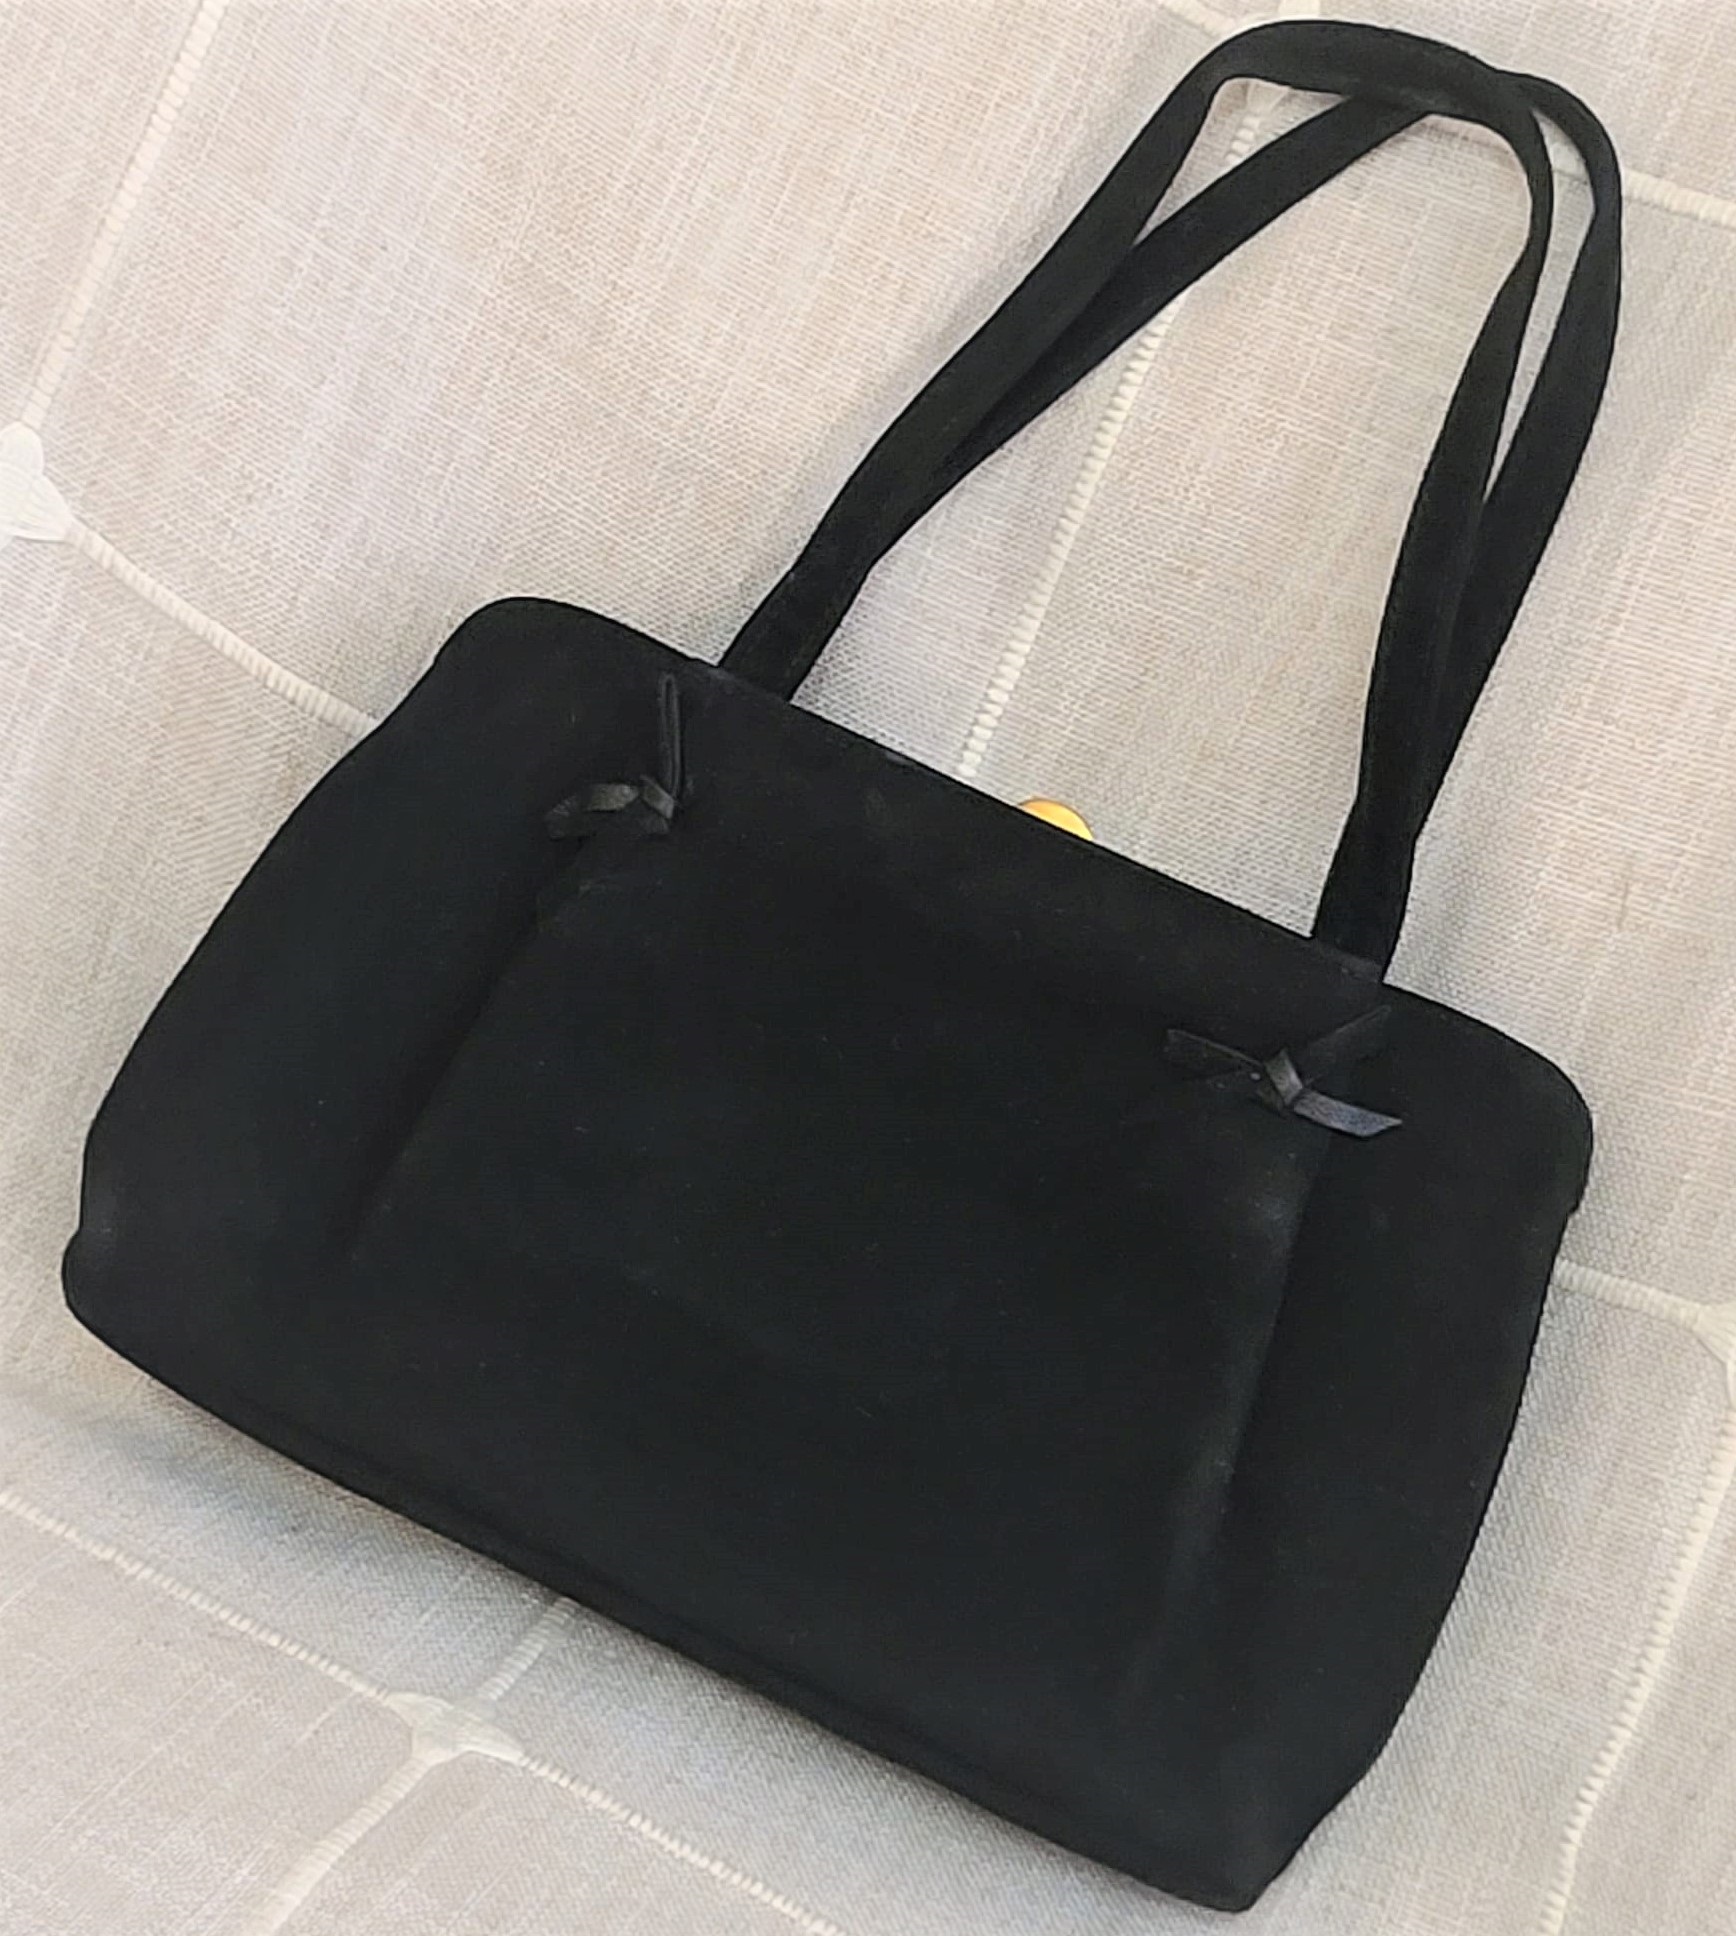 Black velveteen handbag w 2 top handles, multi compartment